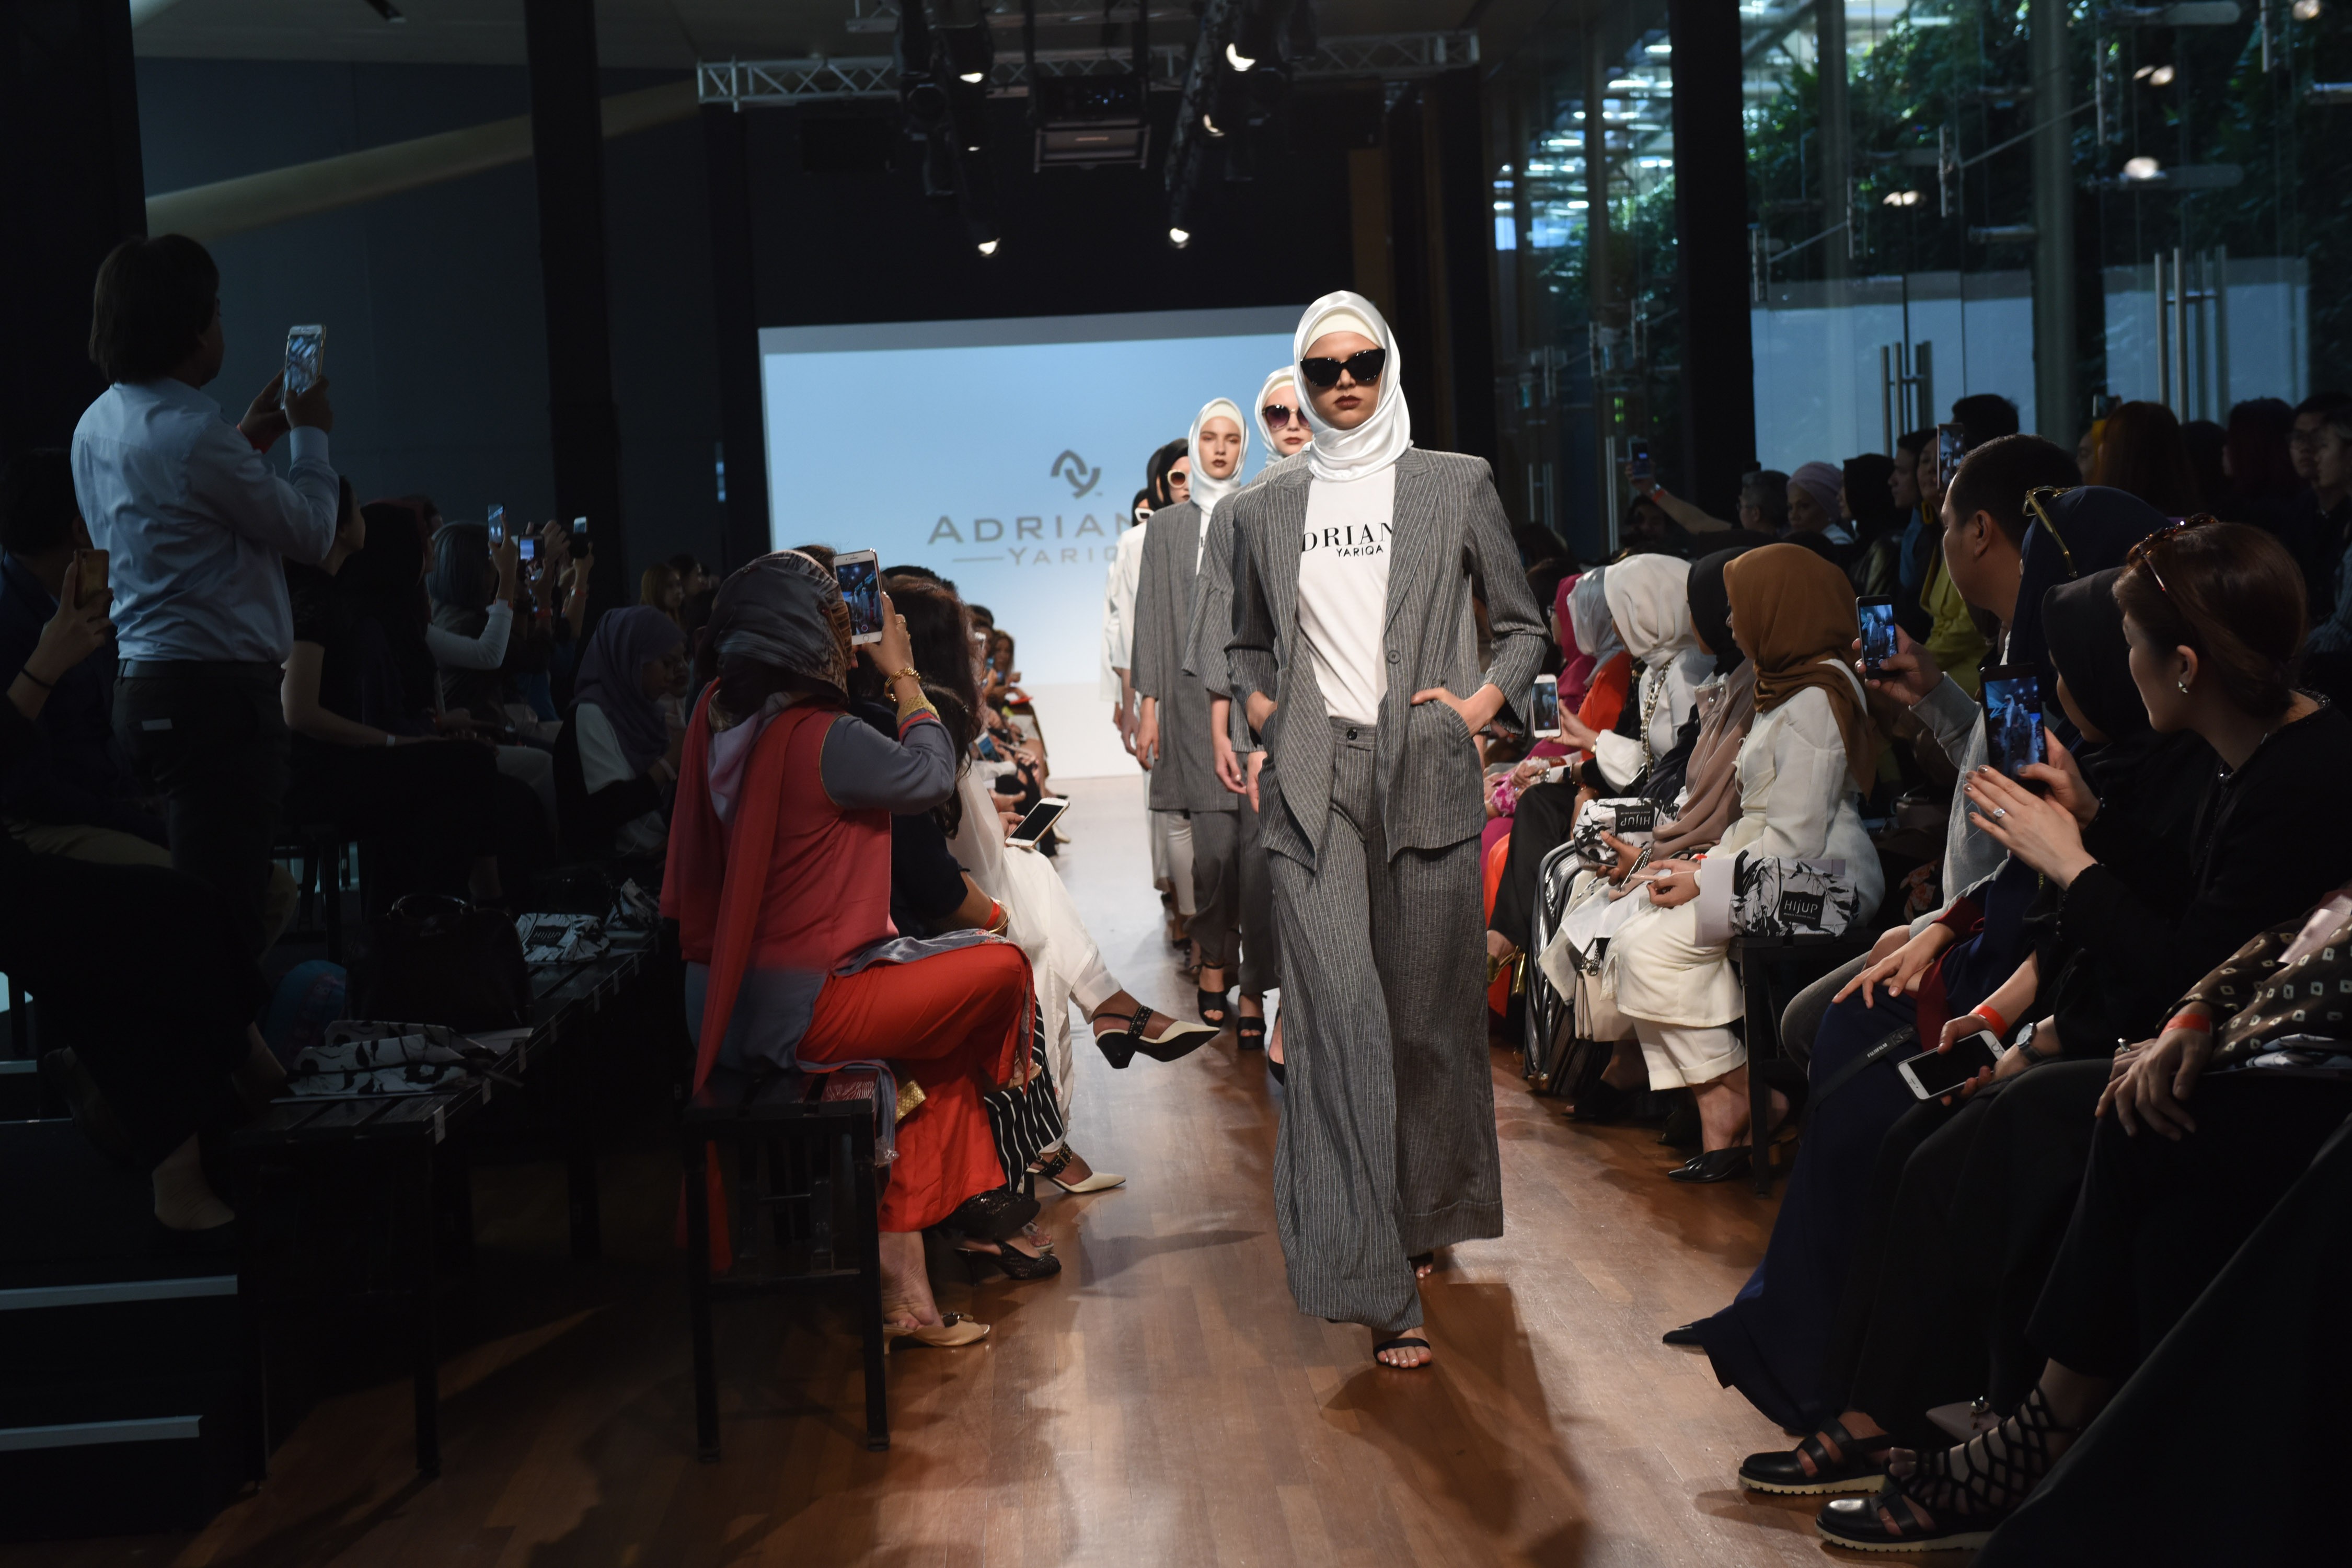 Singaporean Adrianna Yariqa presented sharply cut garments for the hijabi career woman.